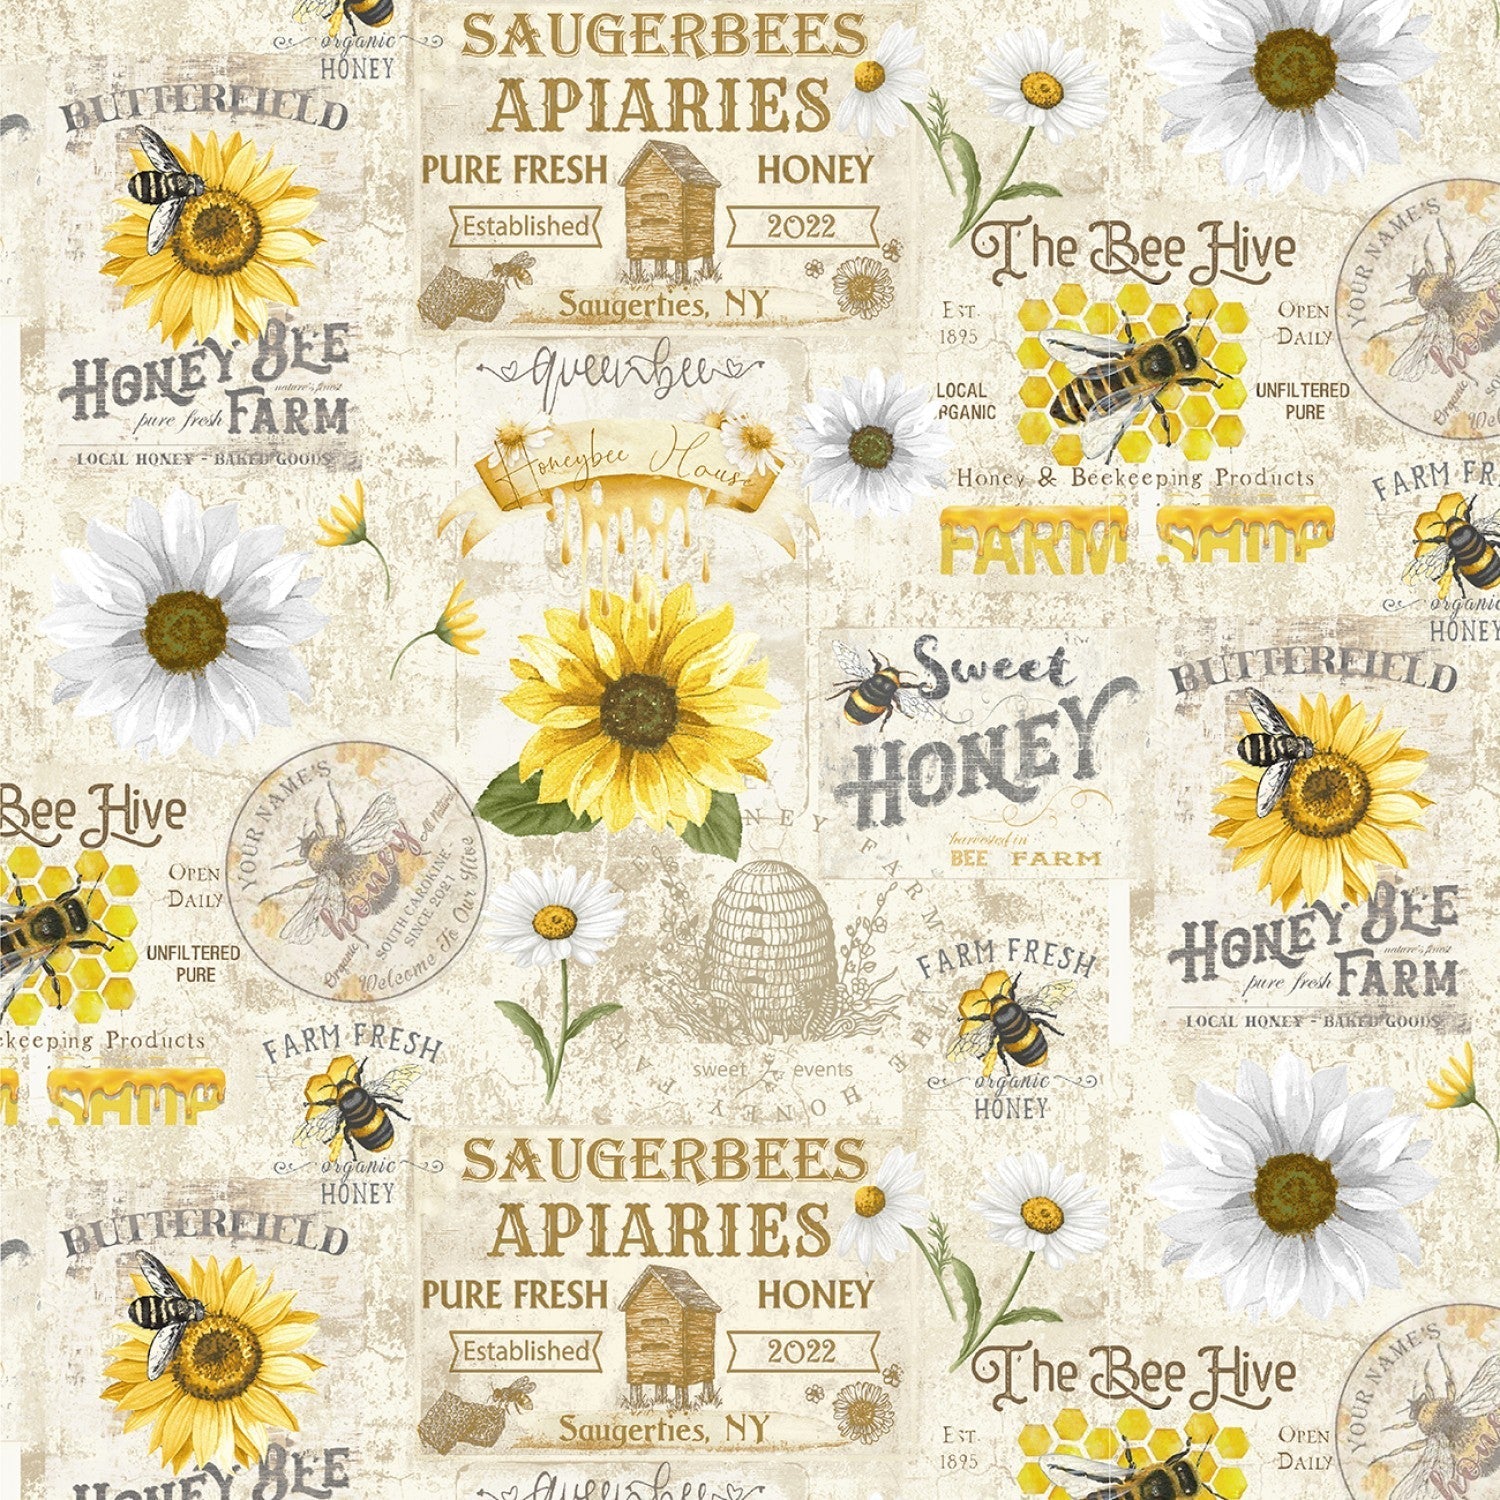 Timeless Treasures Fabric Bundle Honey Bee Farm 1/2 yard bundle (10 pieces)